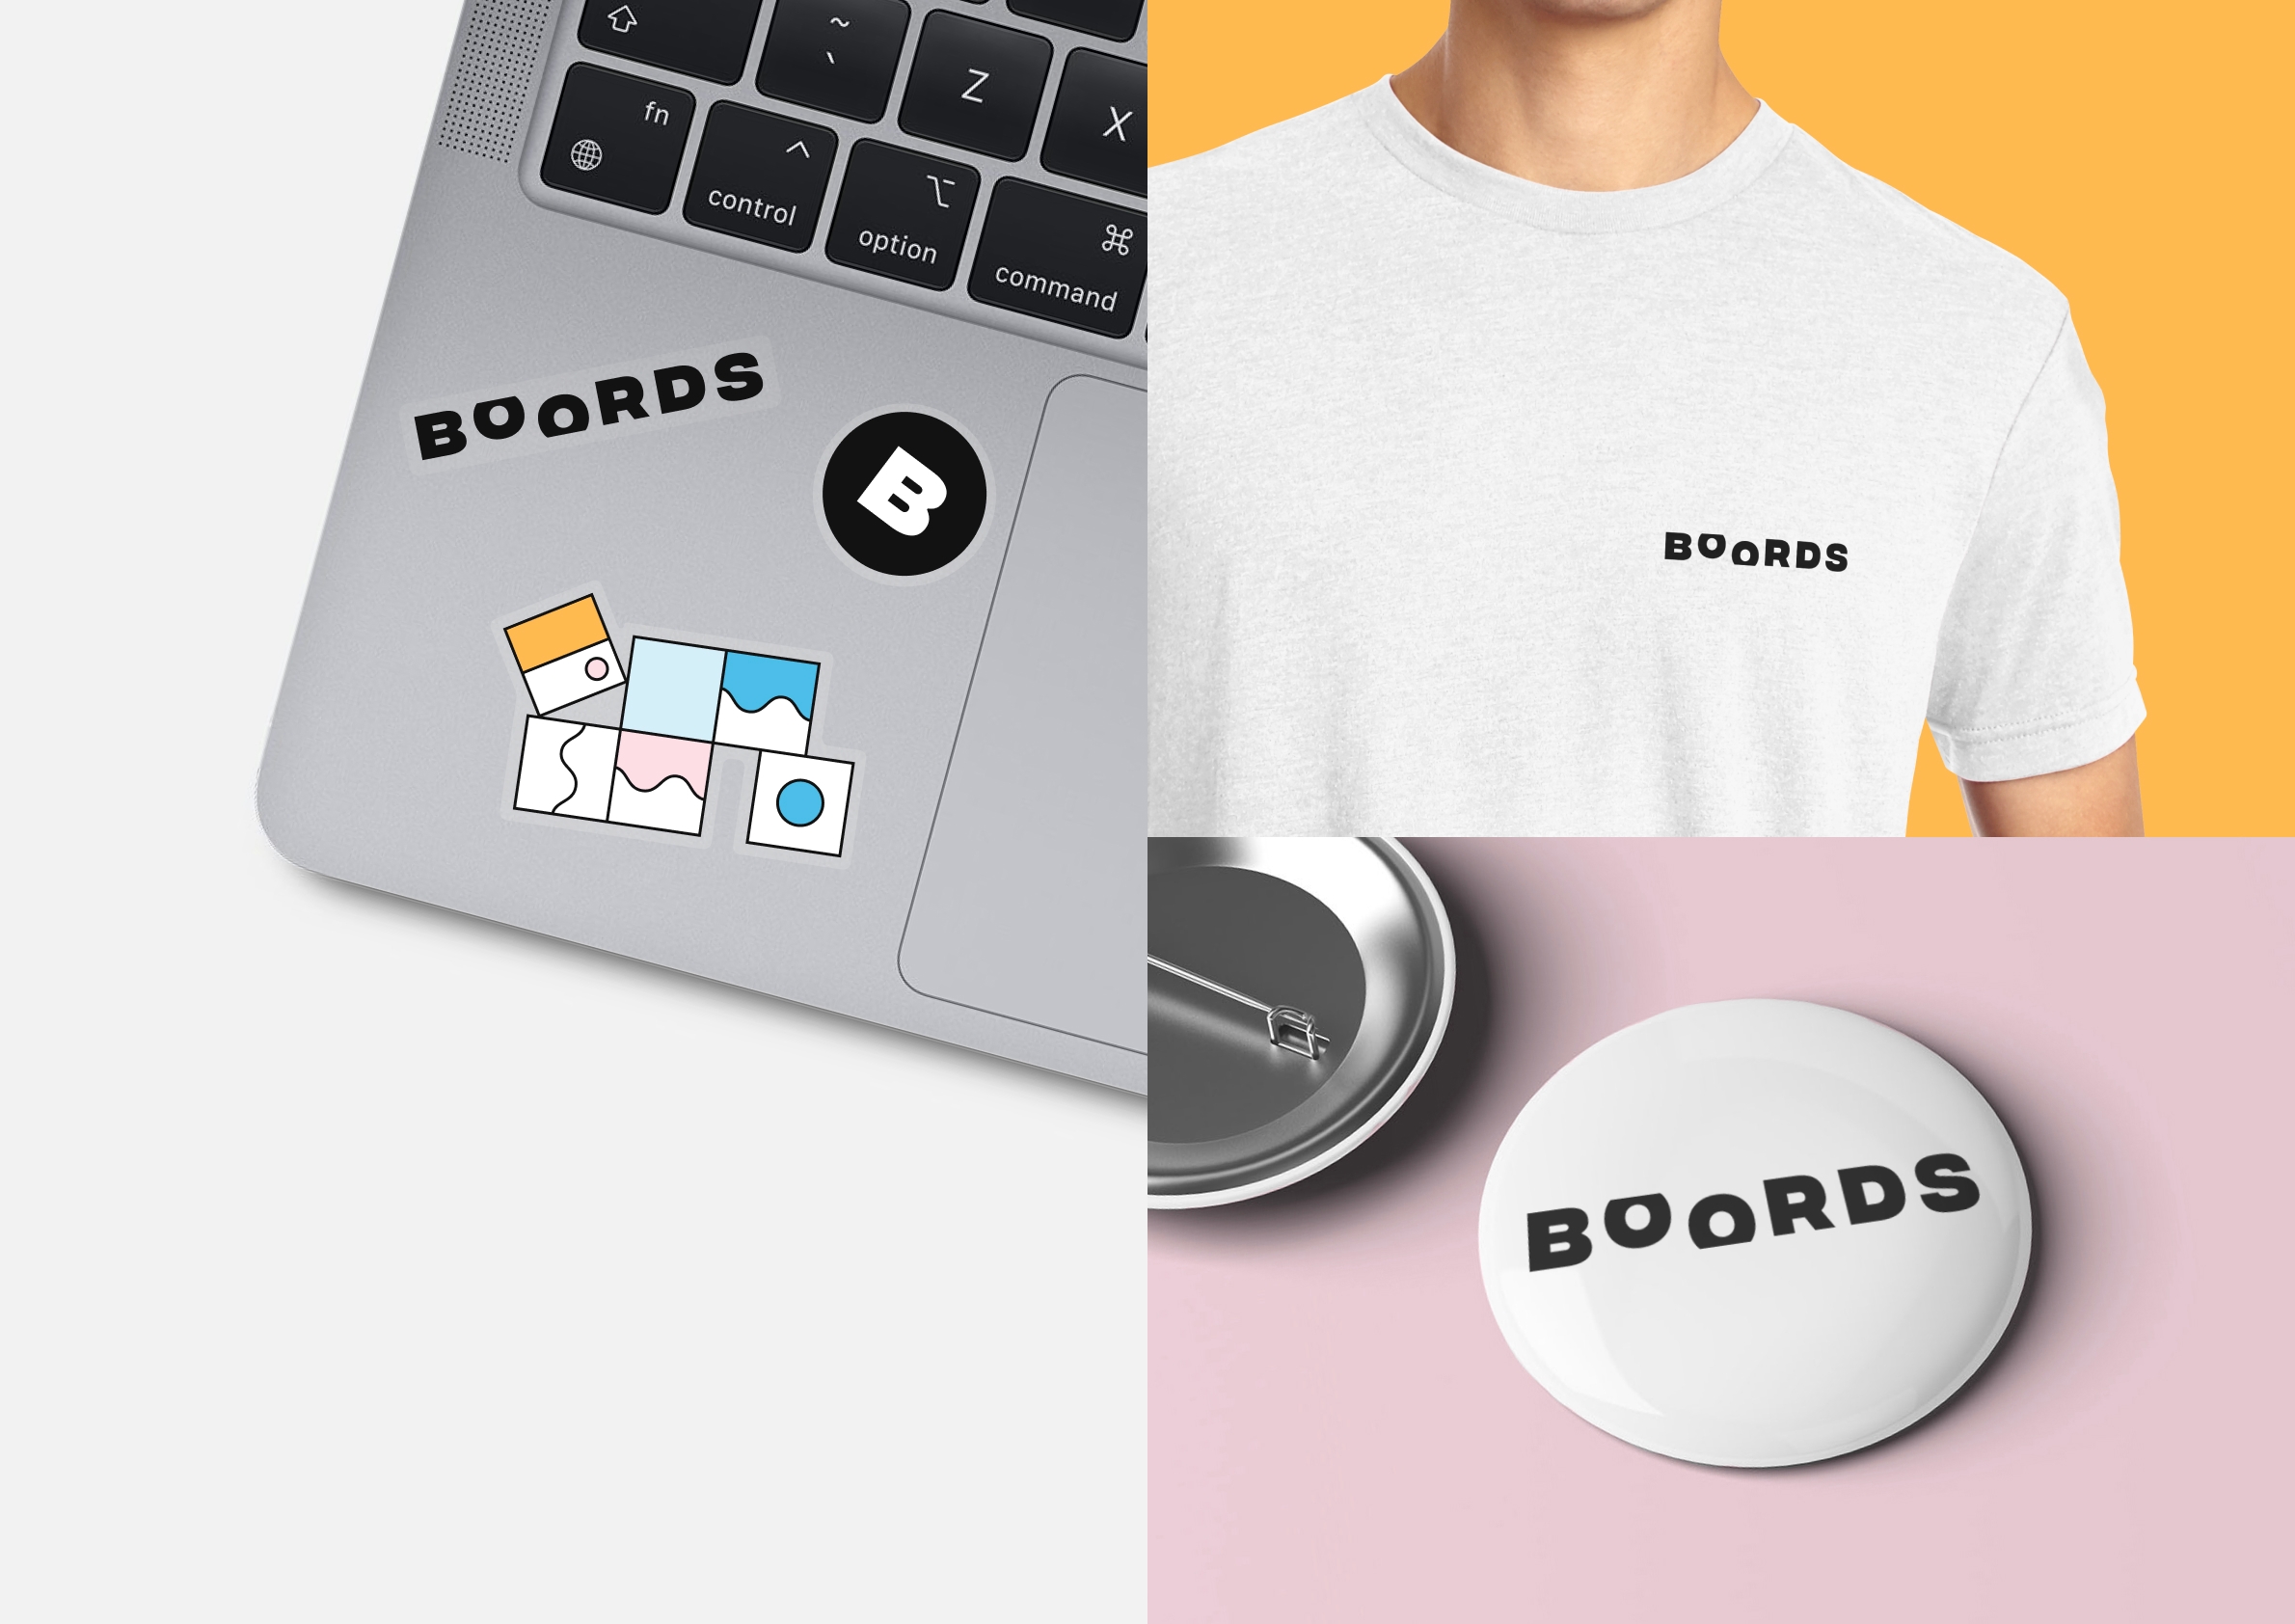 Boords branding examples